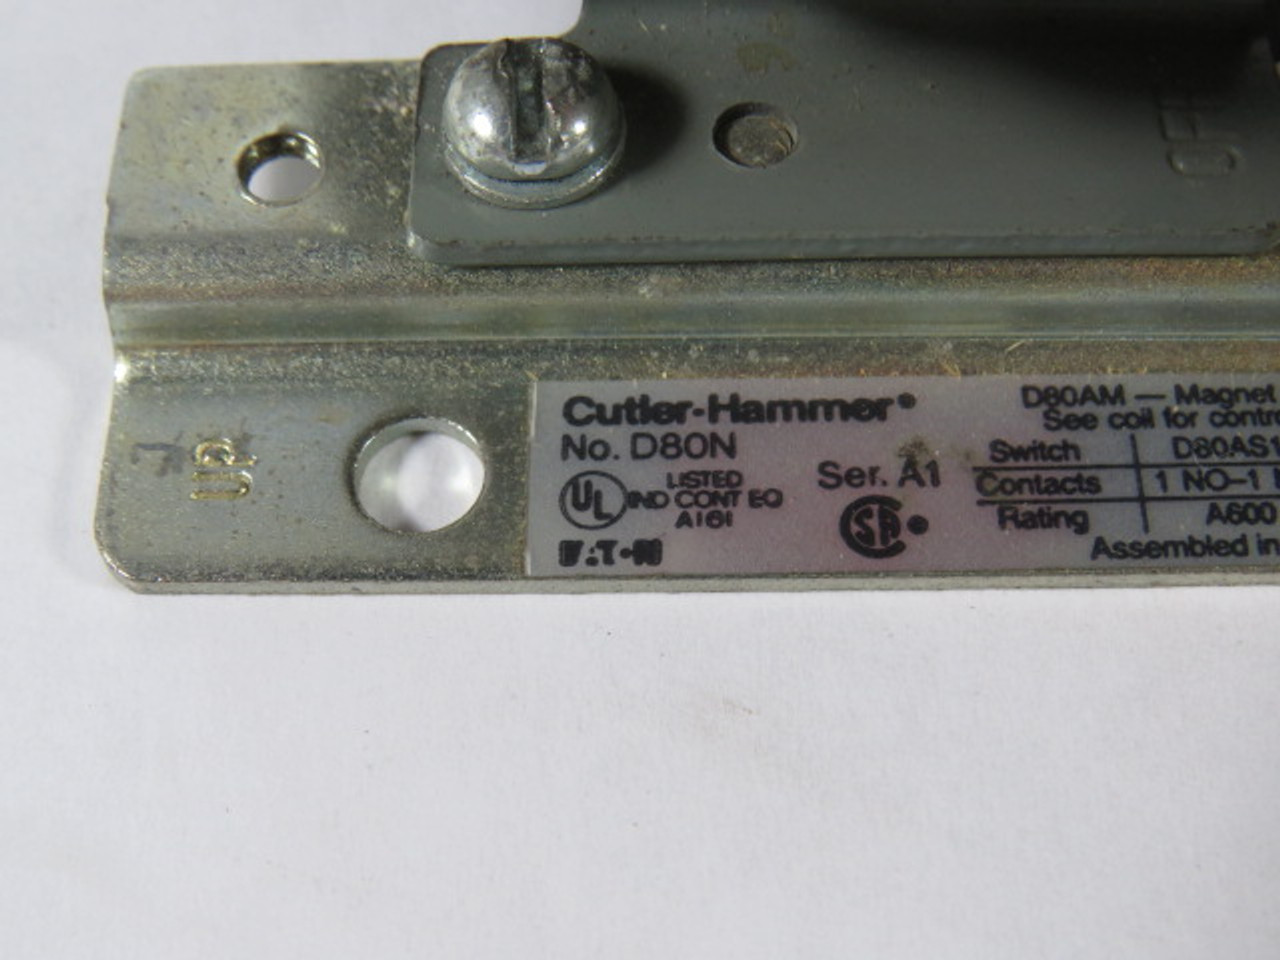 Cutler-Hammer D80N Pneumatic Timer A600 Series A1 USED